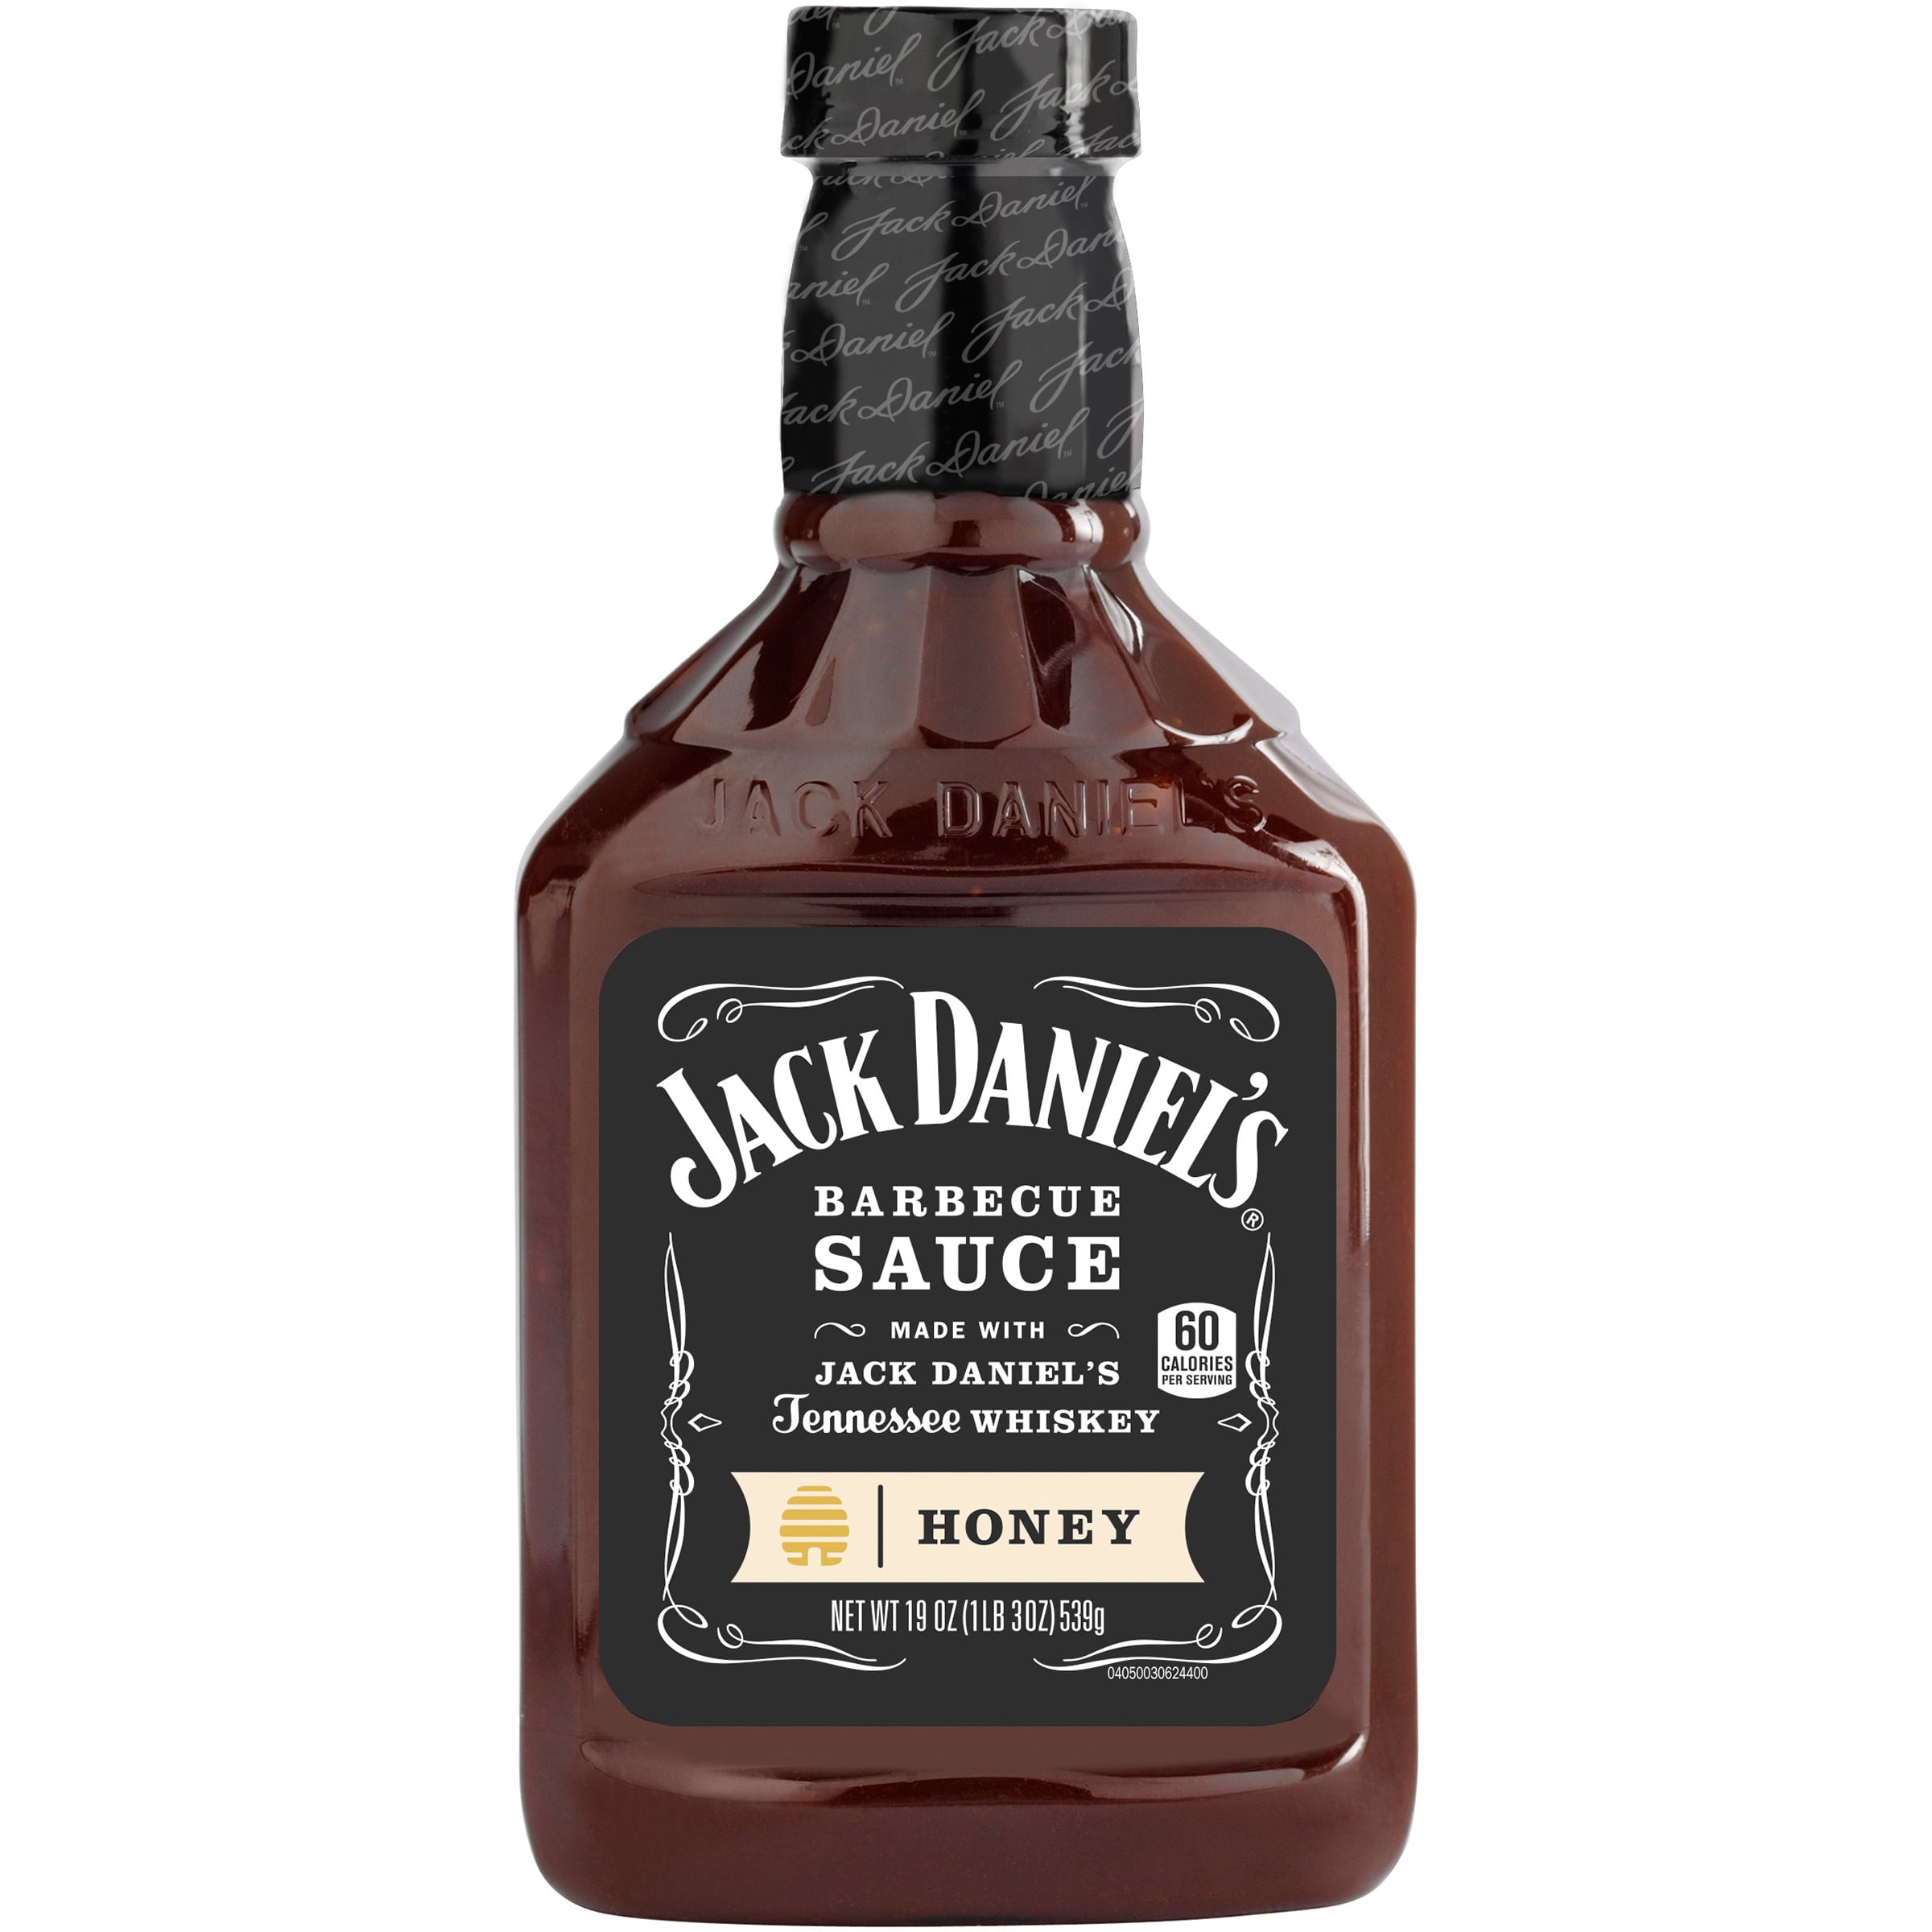 Quagmire pianist Degree Celsius Jack Daniel's Honey Barbecue Sauce, 19 oz Bottle - Walmart.com